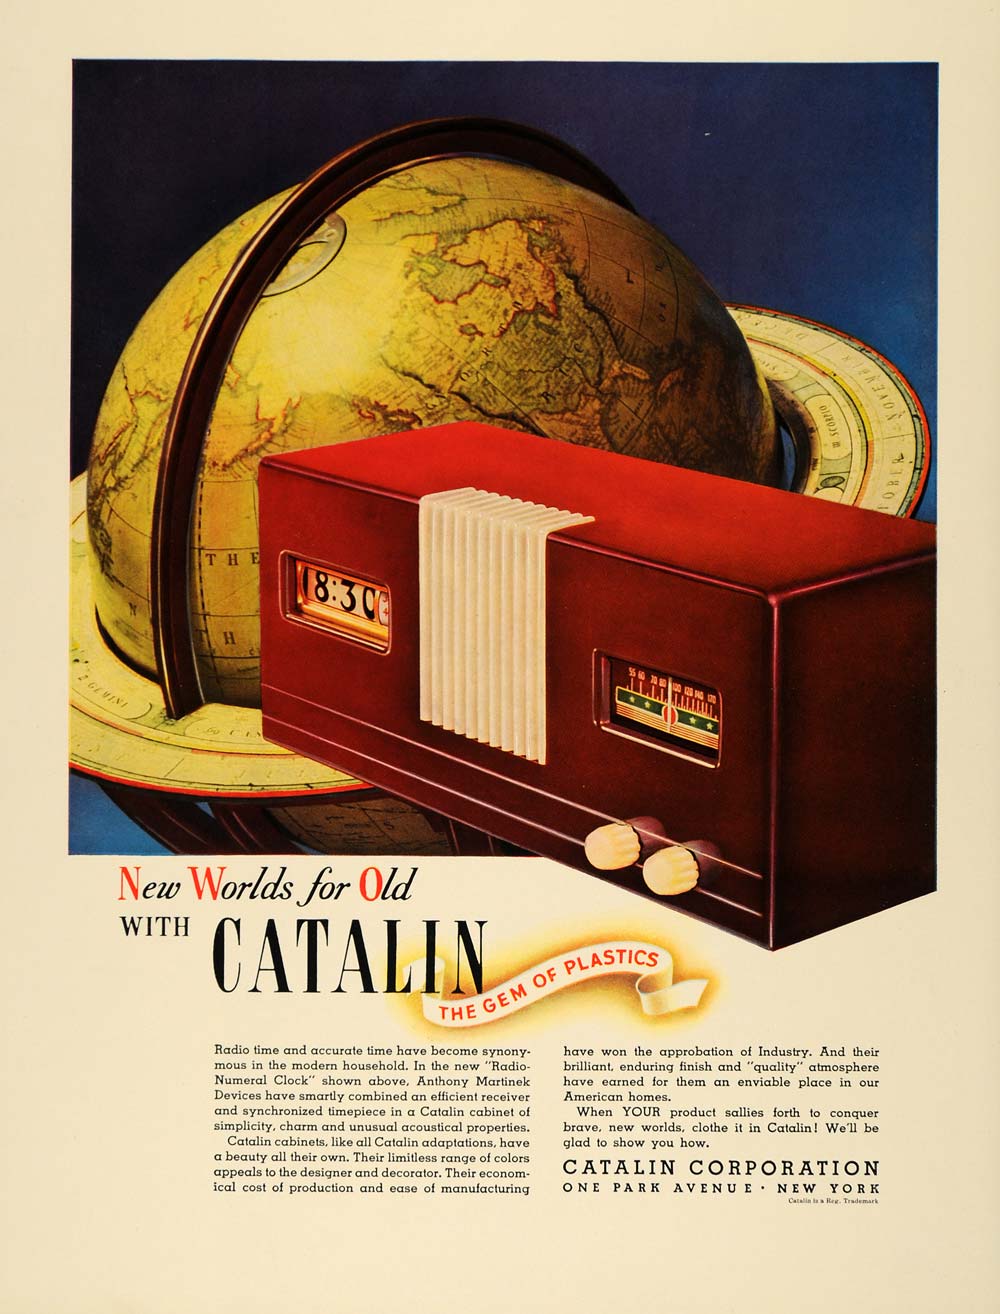 1940 Ad Catalan Plastics Radio Numeral Clock Martinek - ORIGINAL ADVERTISING F4A